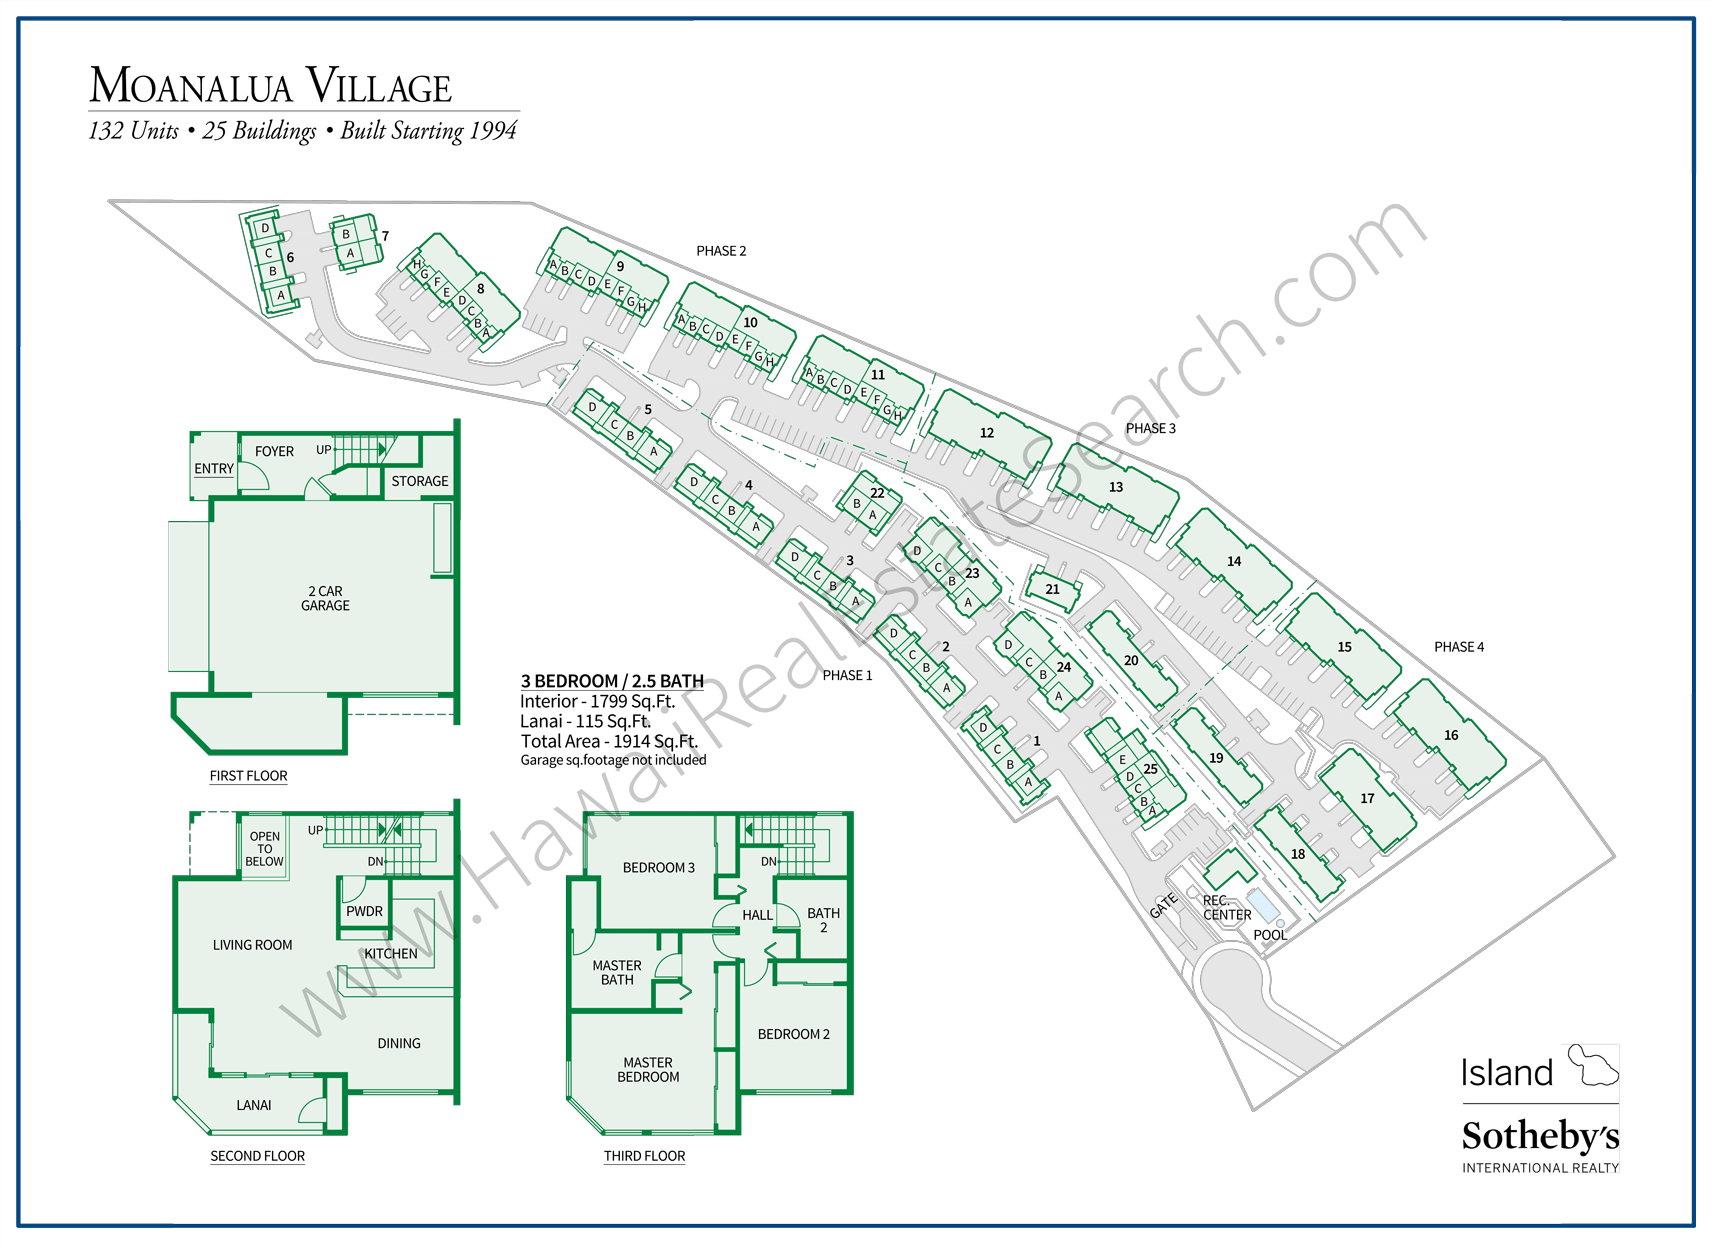 Moanalua Village Map and Floor Plan